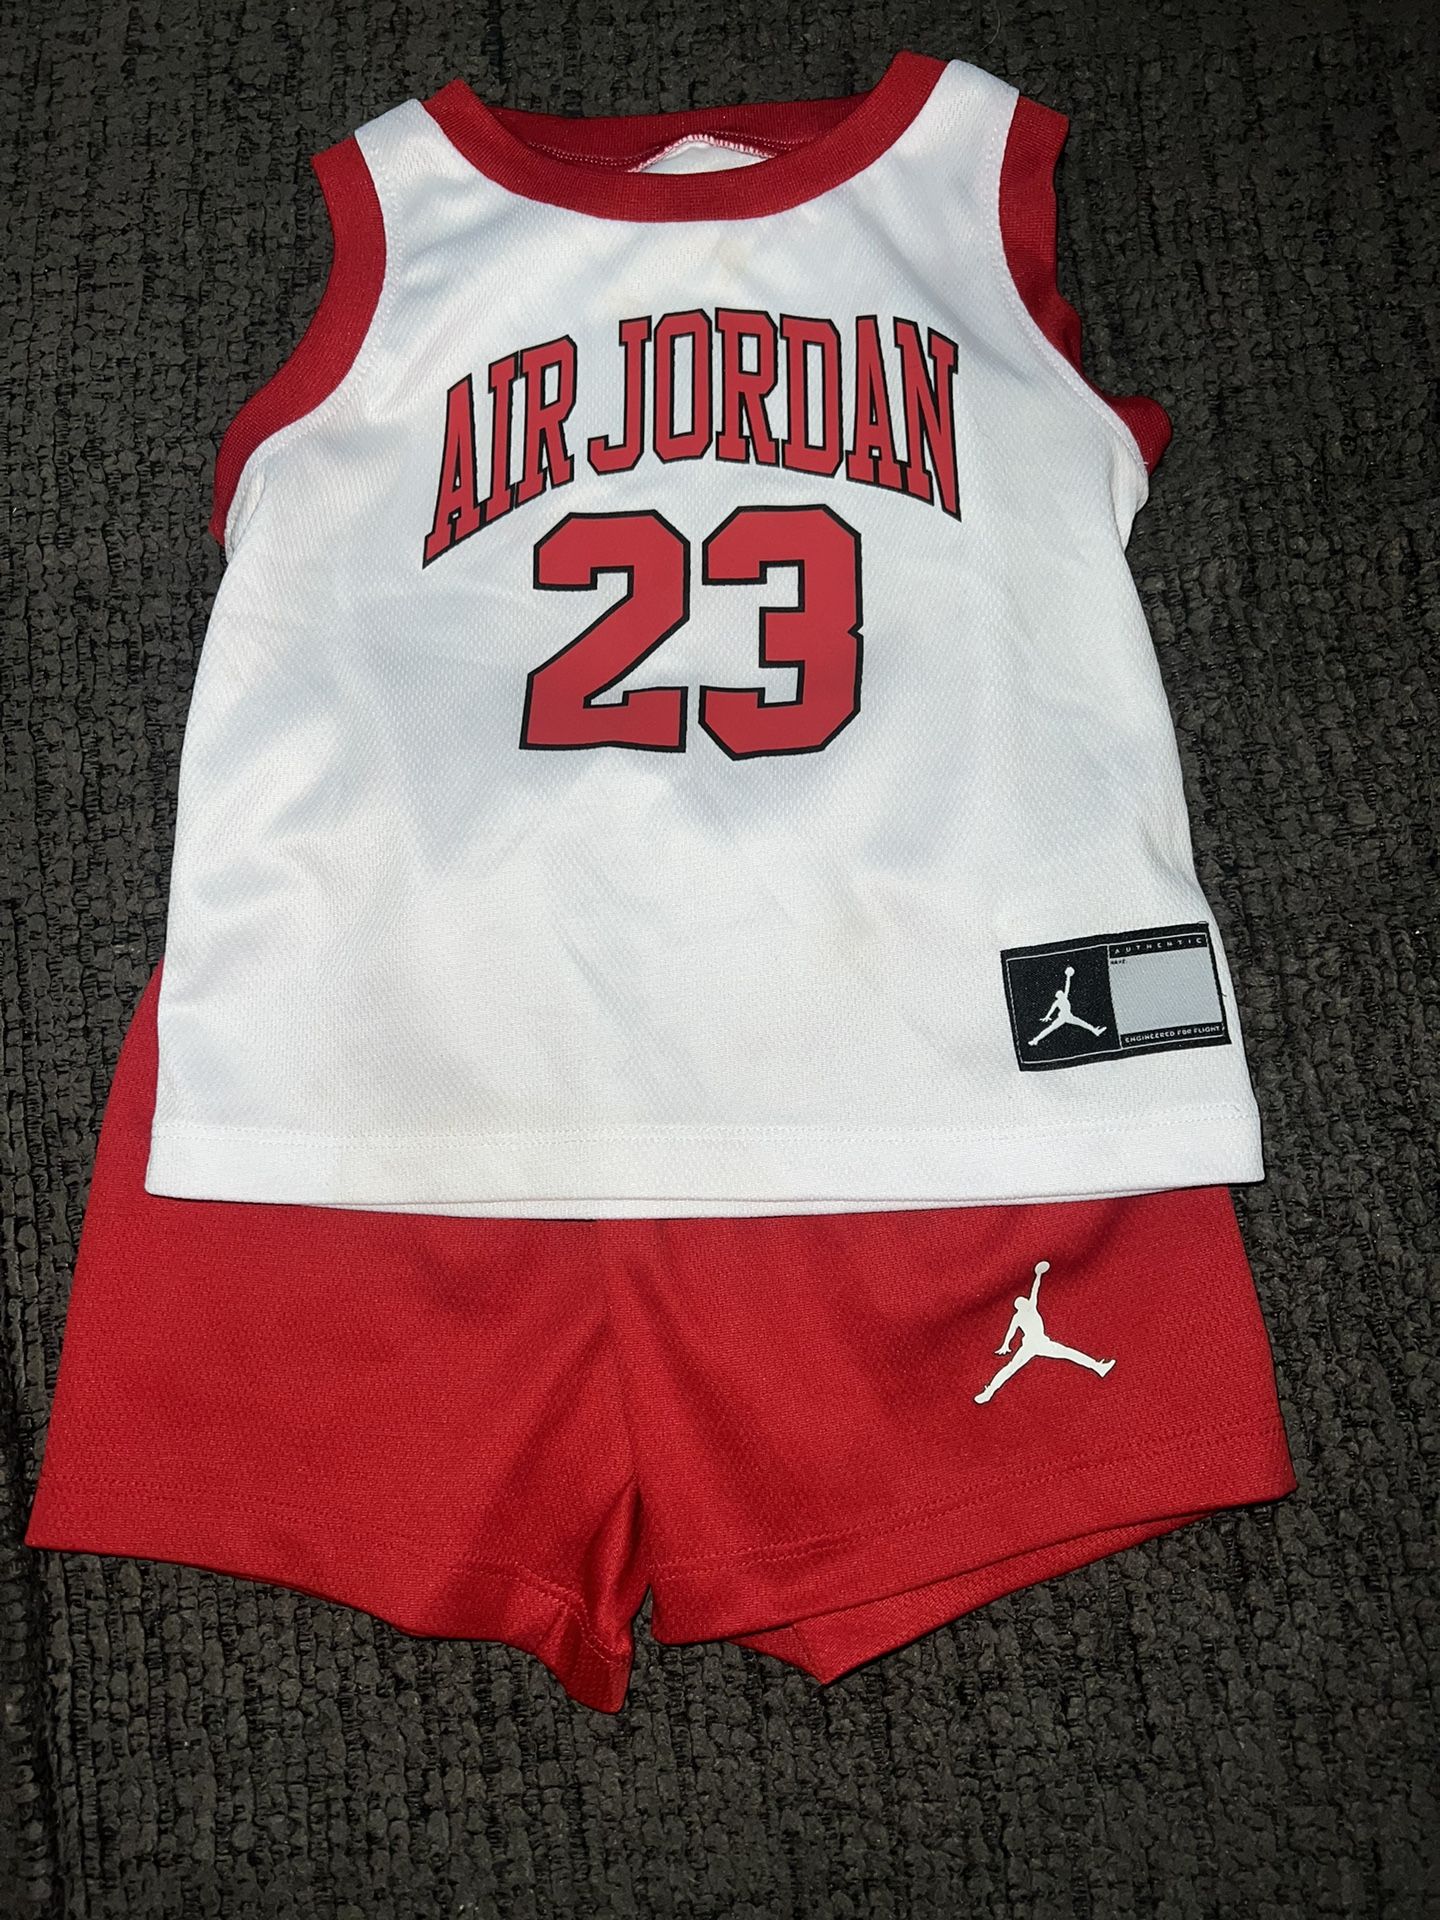 Air Jordan Baby Jersey 